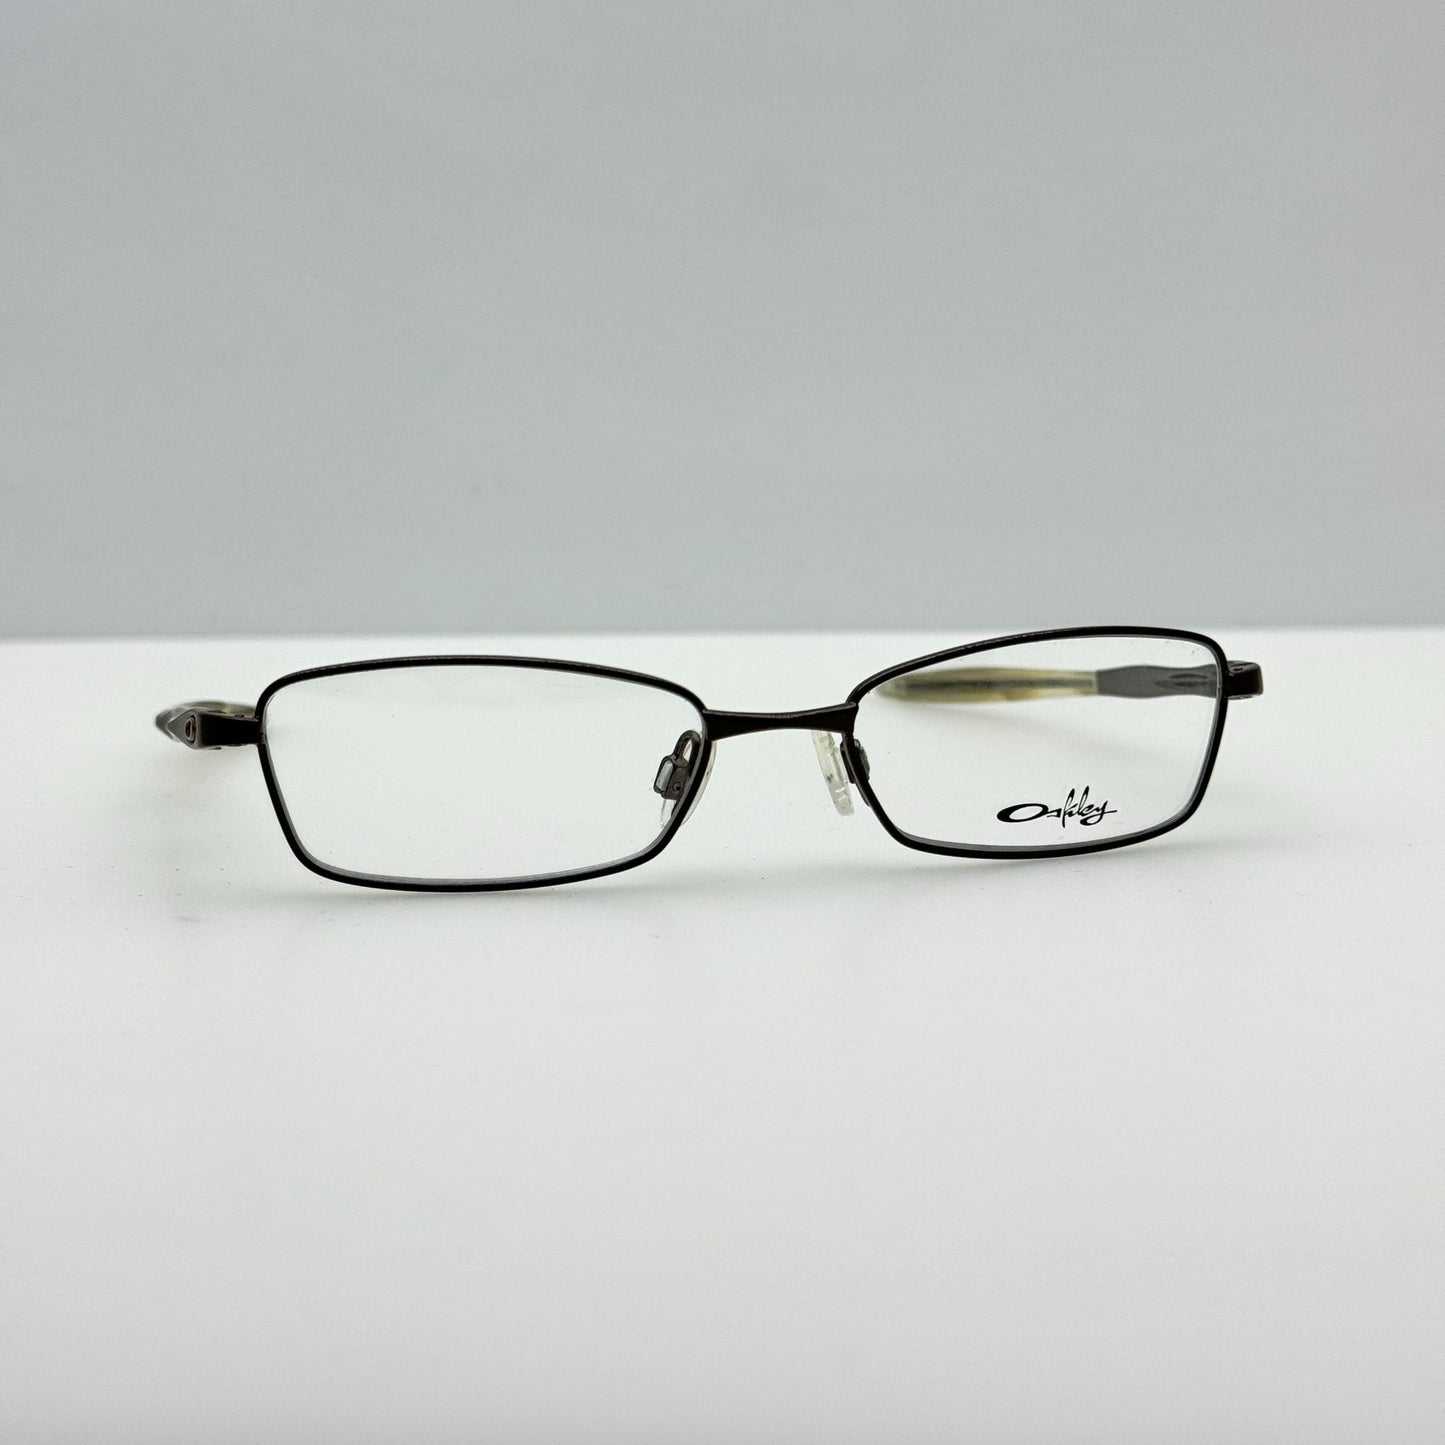 Oakley Eyeglasses Eye Glasses Frames OX3091-0149 Splender Chocolate 49-16-135